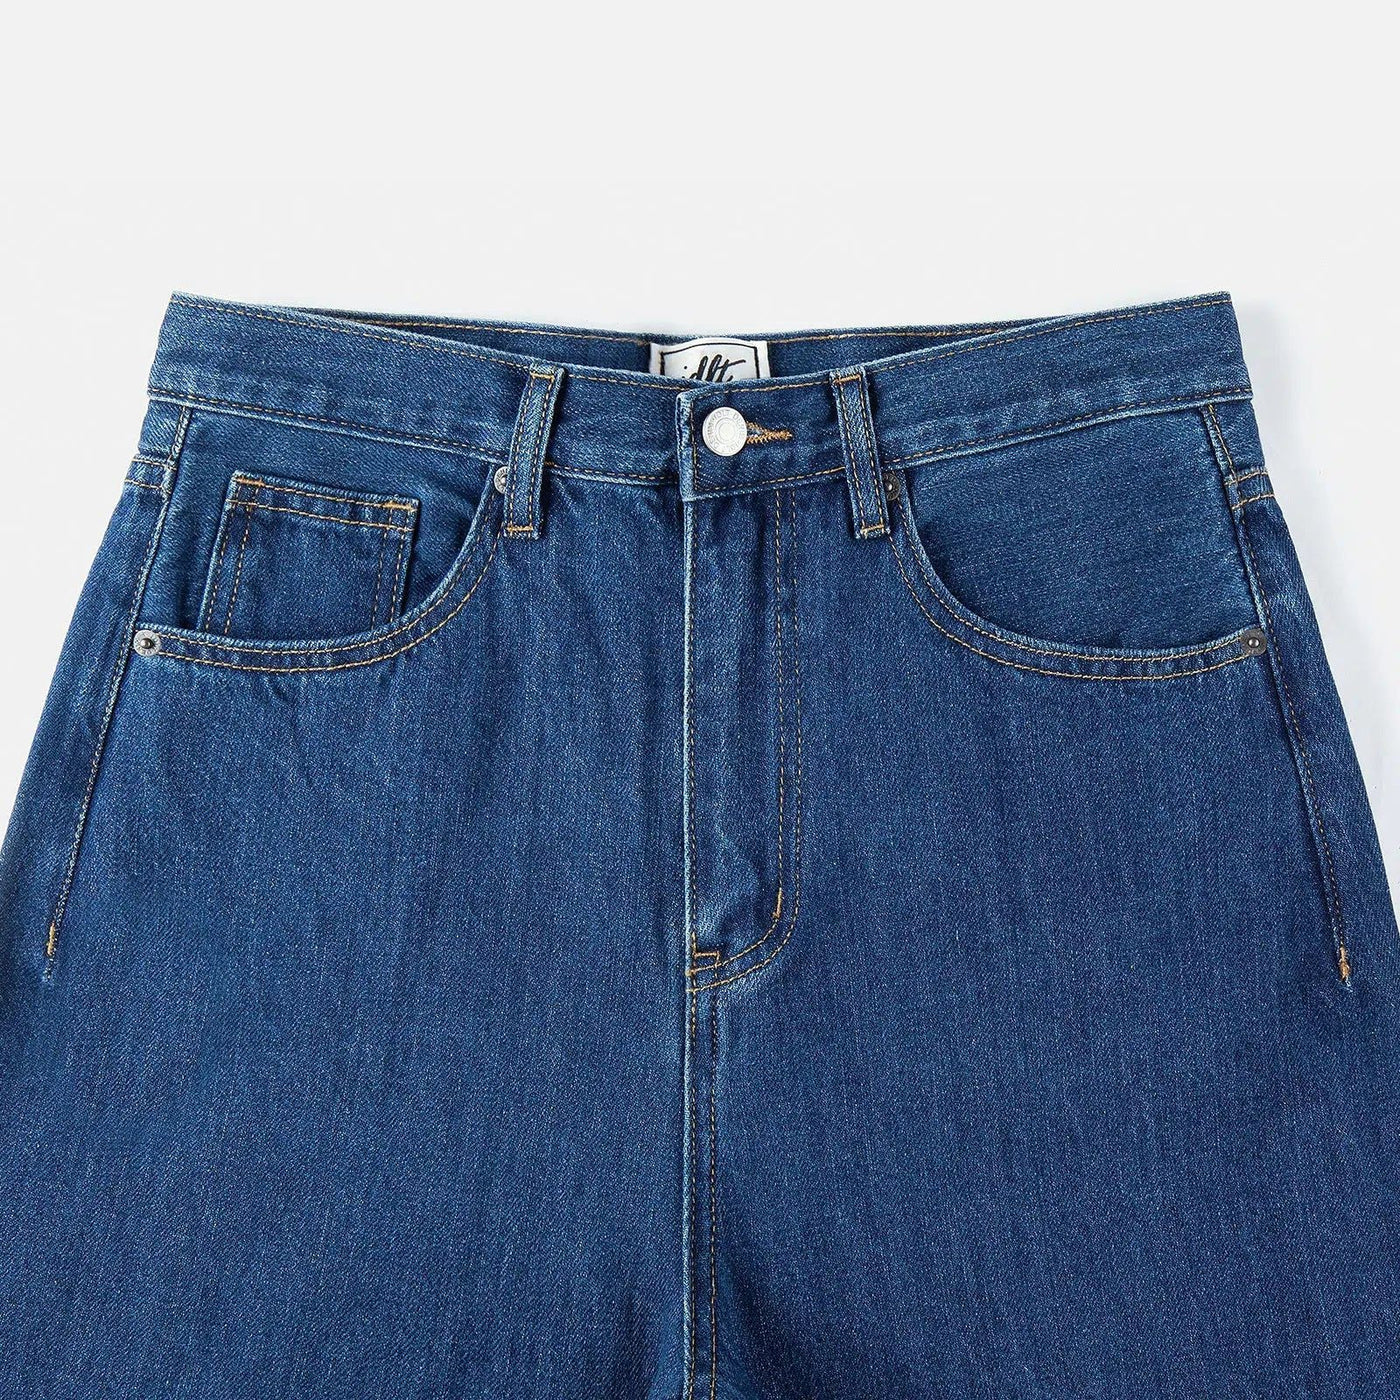 Wide Leg Cut Classic Jeans Korean Street Fashion Jeans By IDLT Shop Online at OH Vault